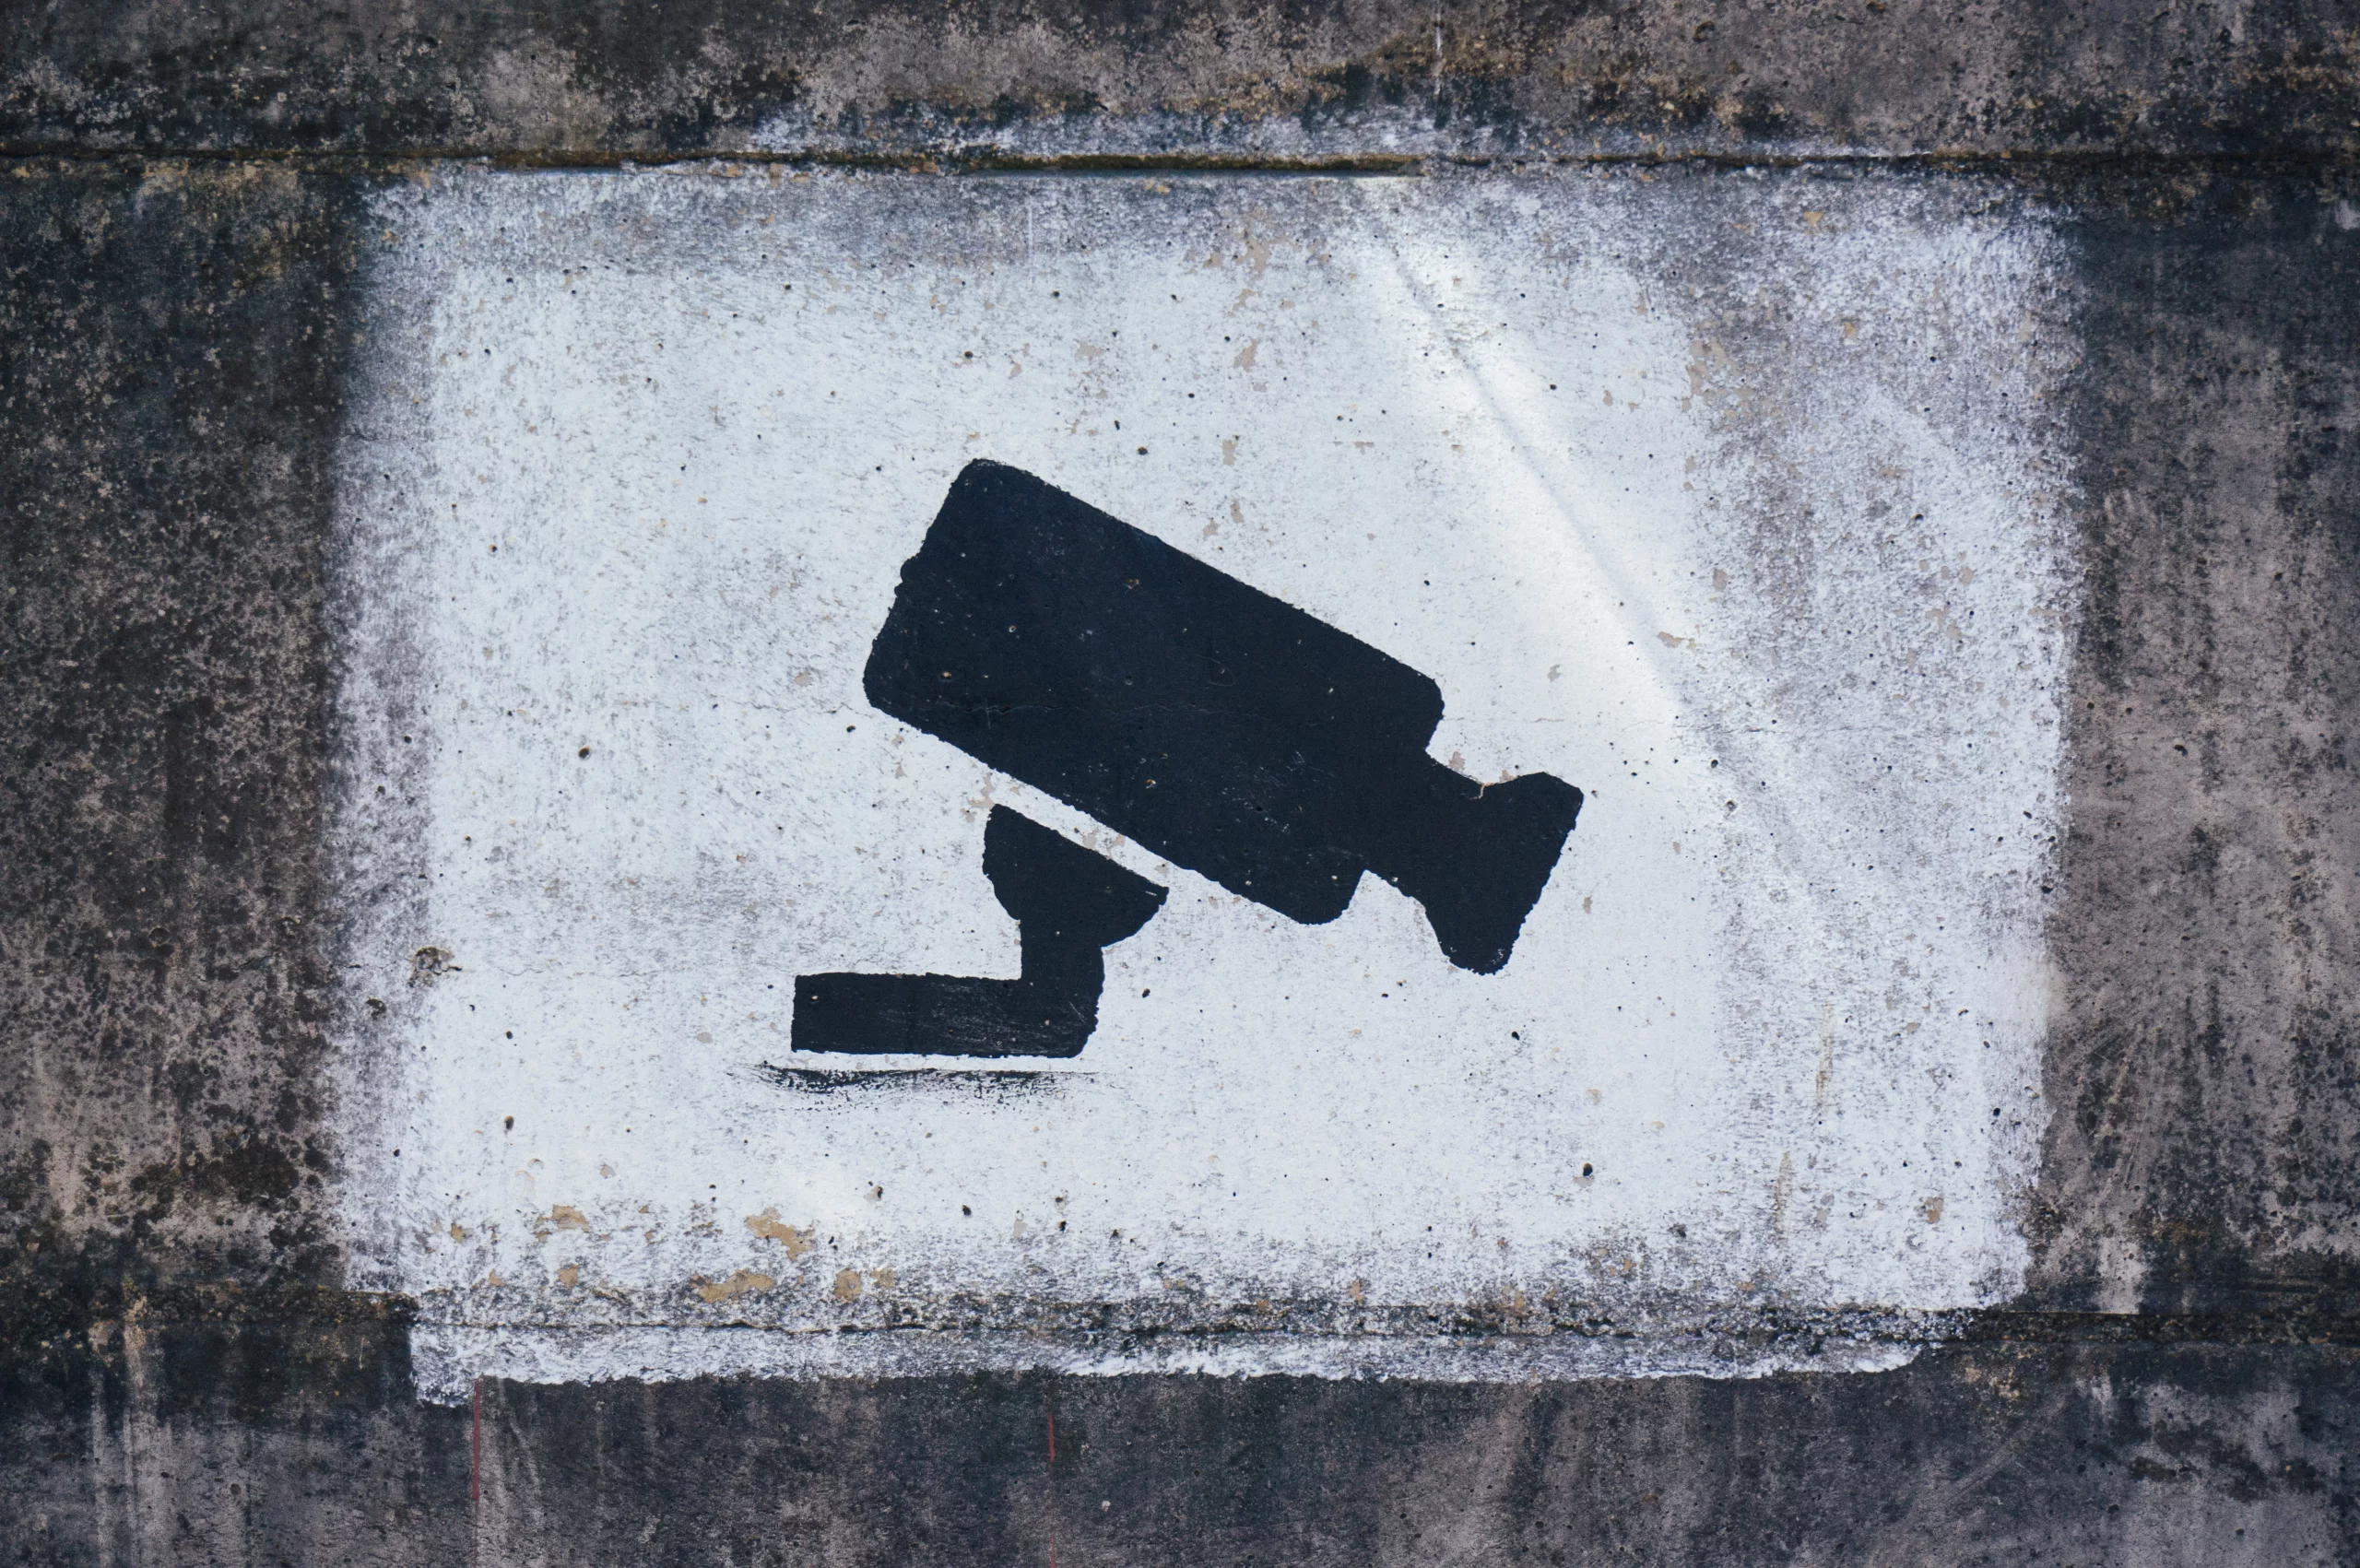 CCTV image